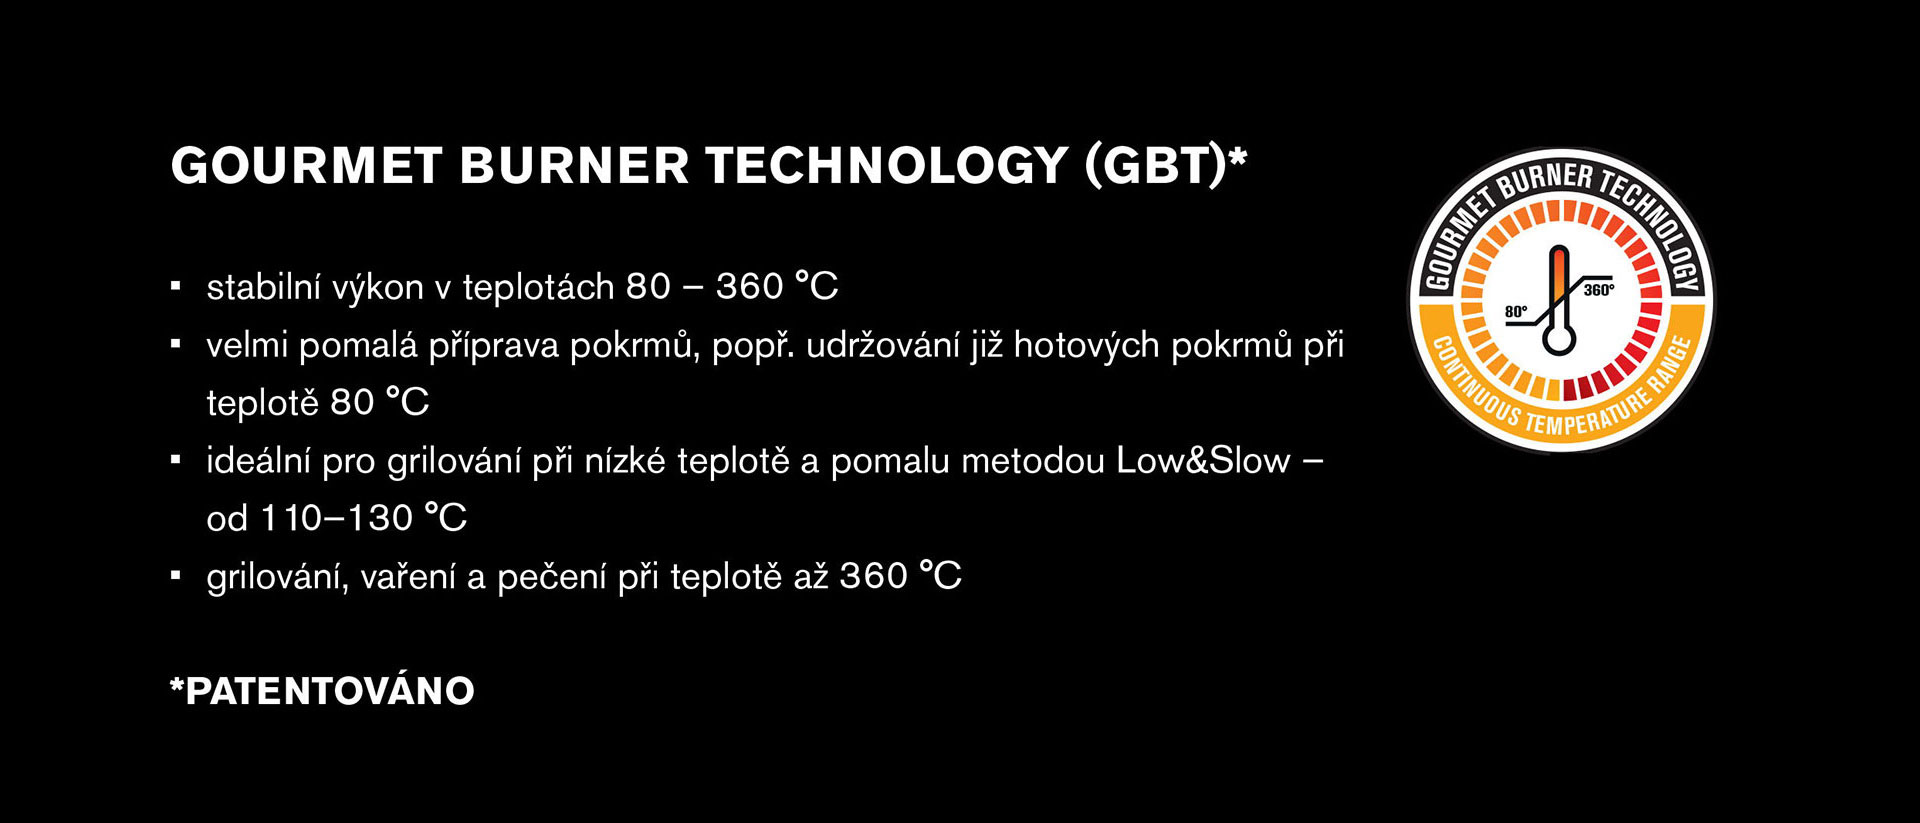 GBT Gourmet Burner Technology